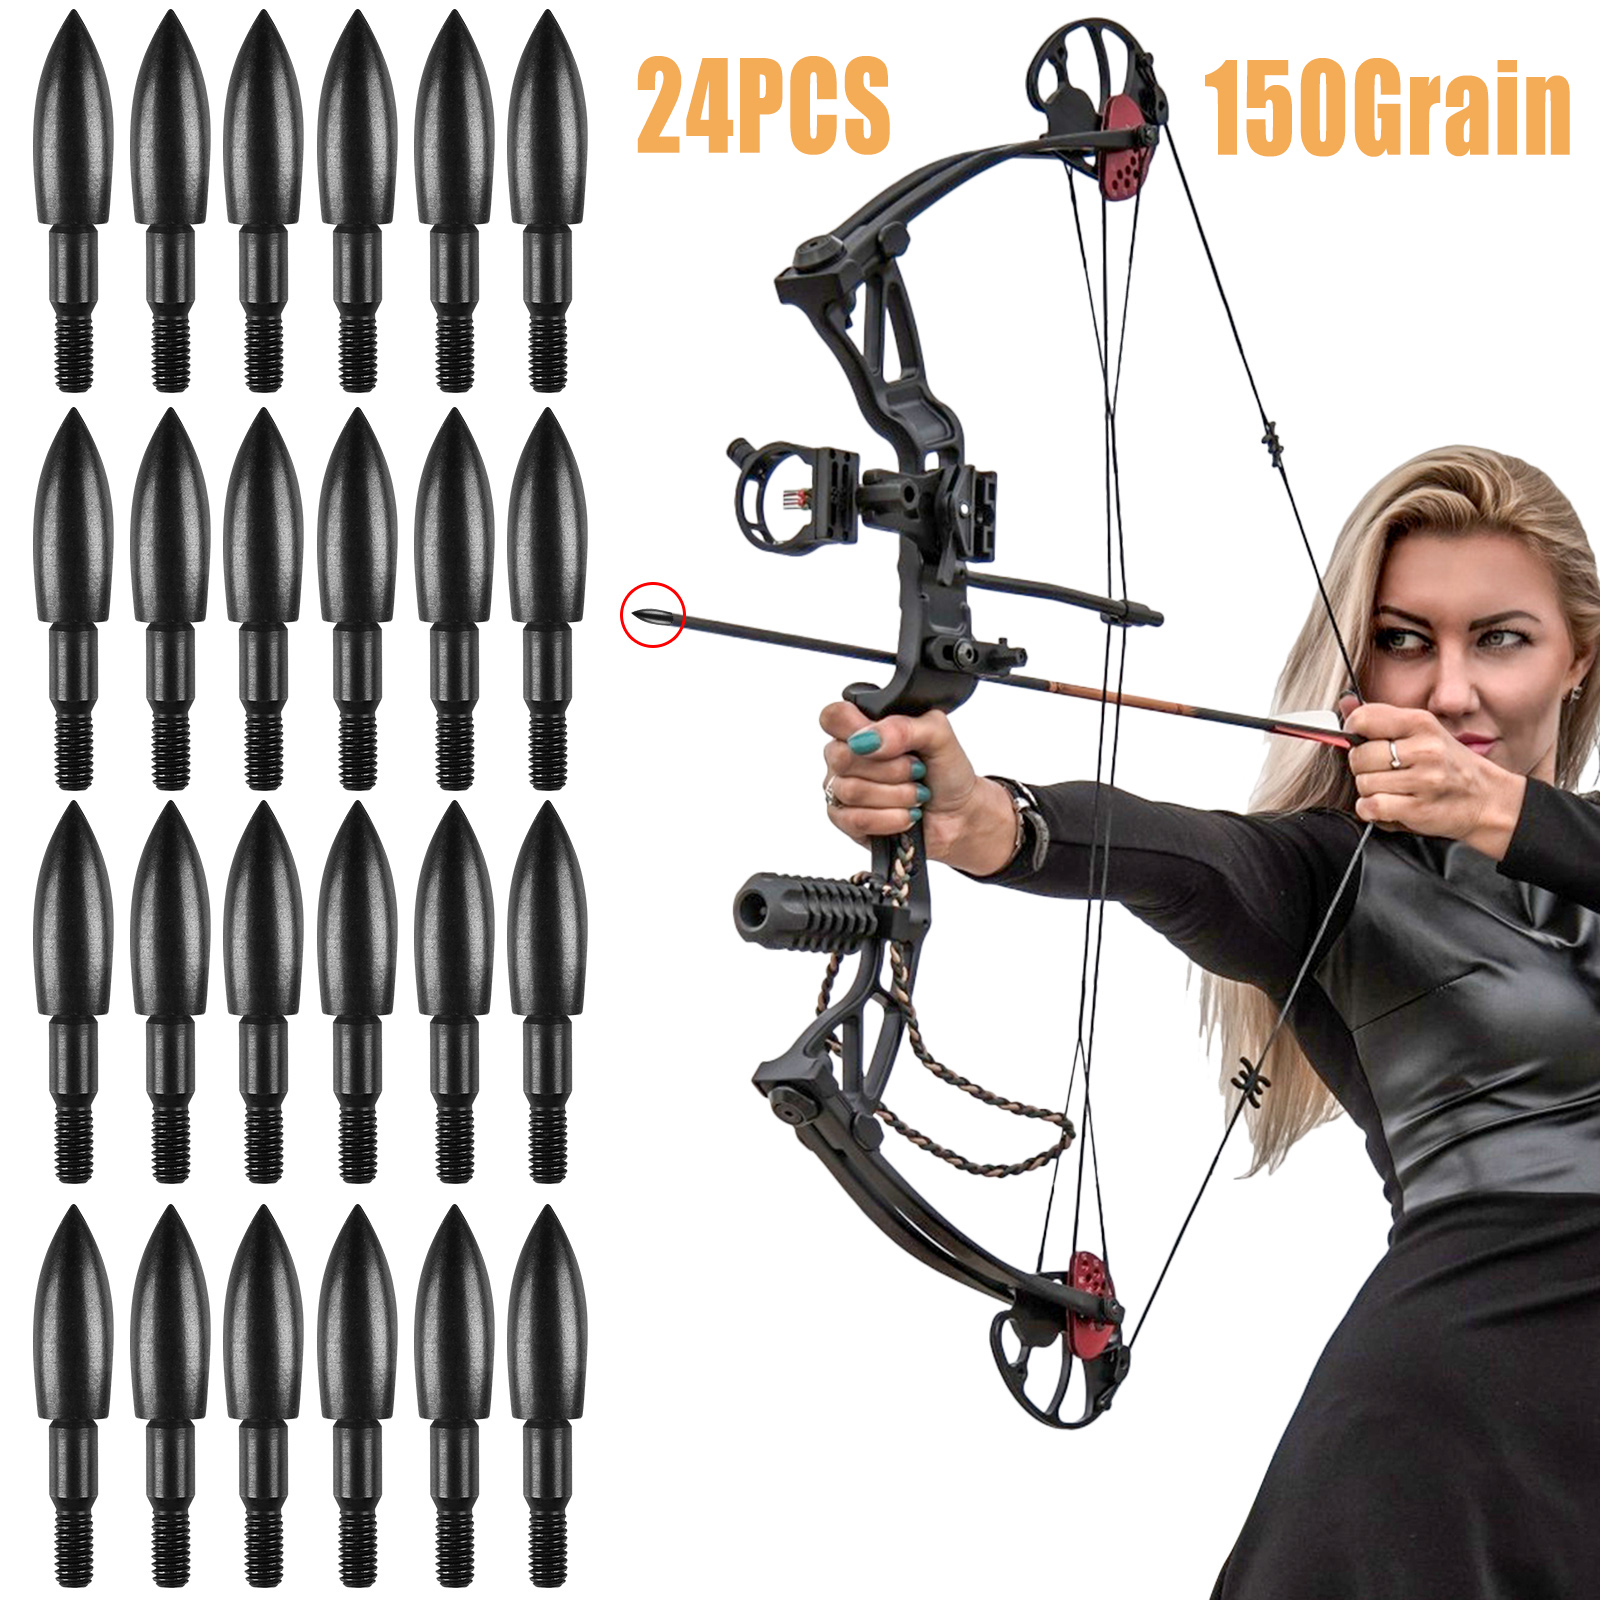 24/12x 100 Grain Hunting Broadhead Arrow 3Fixed Blade Archery Bow Crossbow Tips 